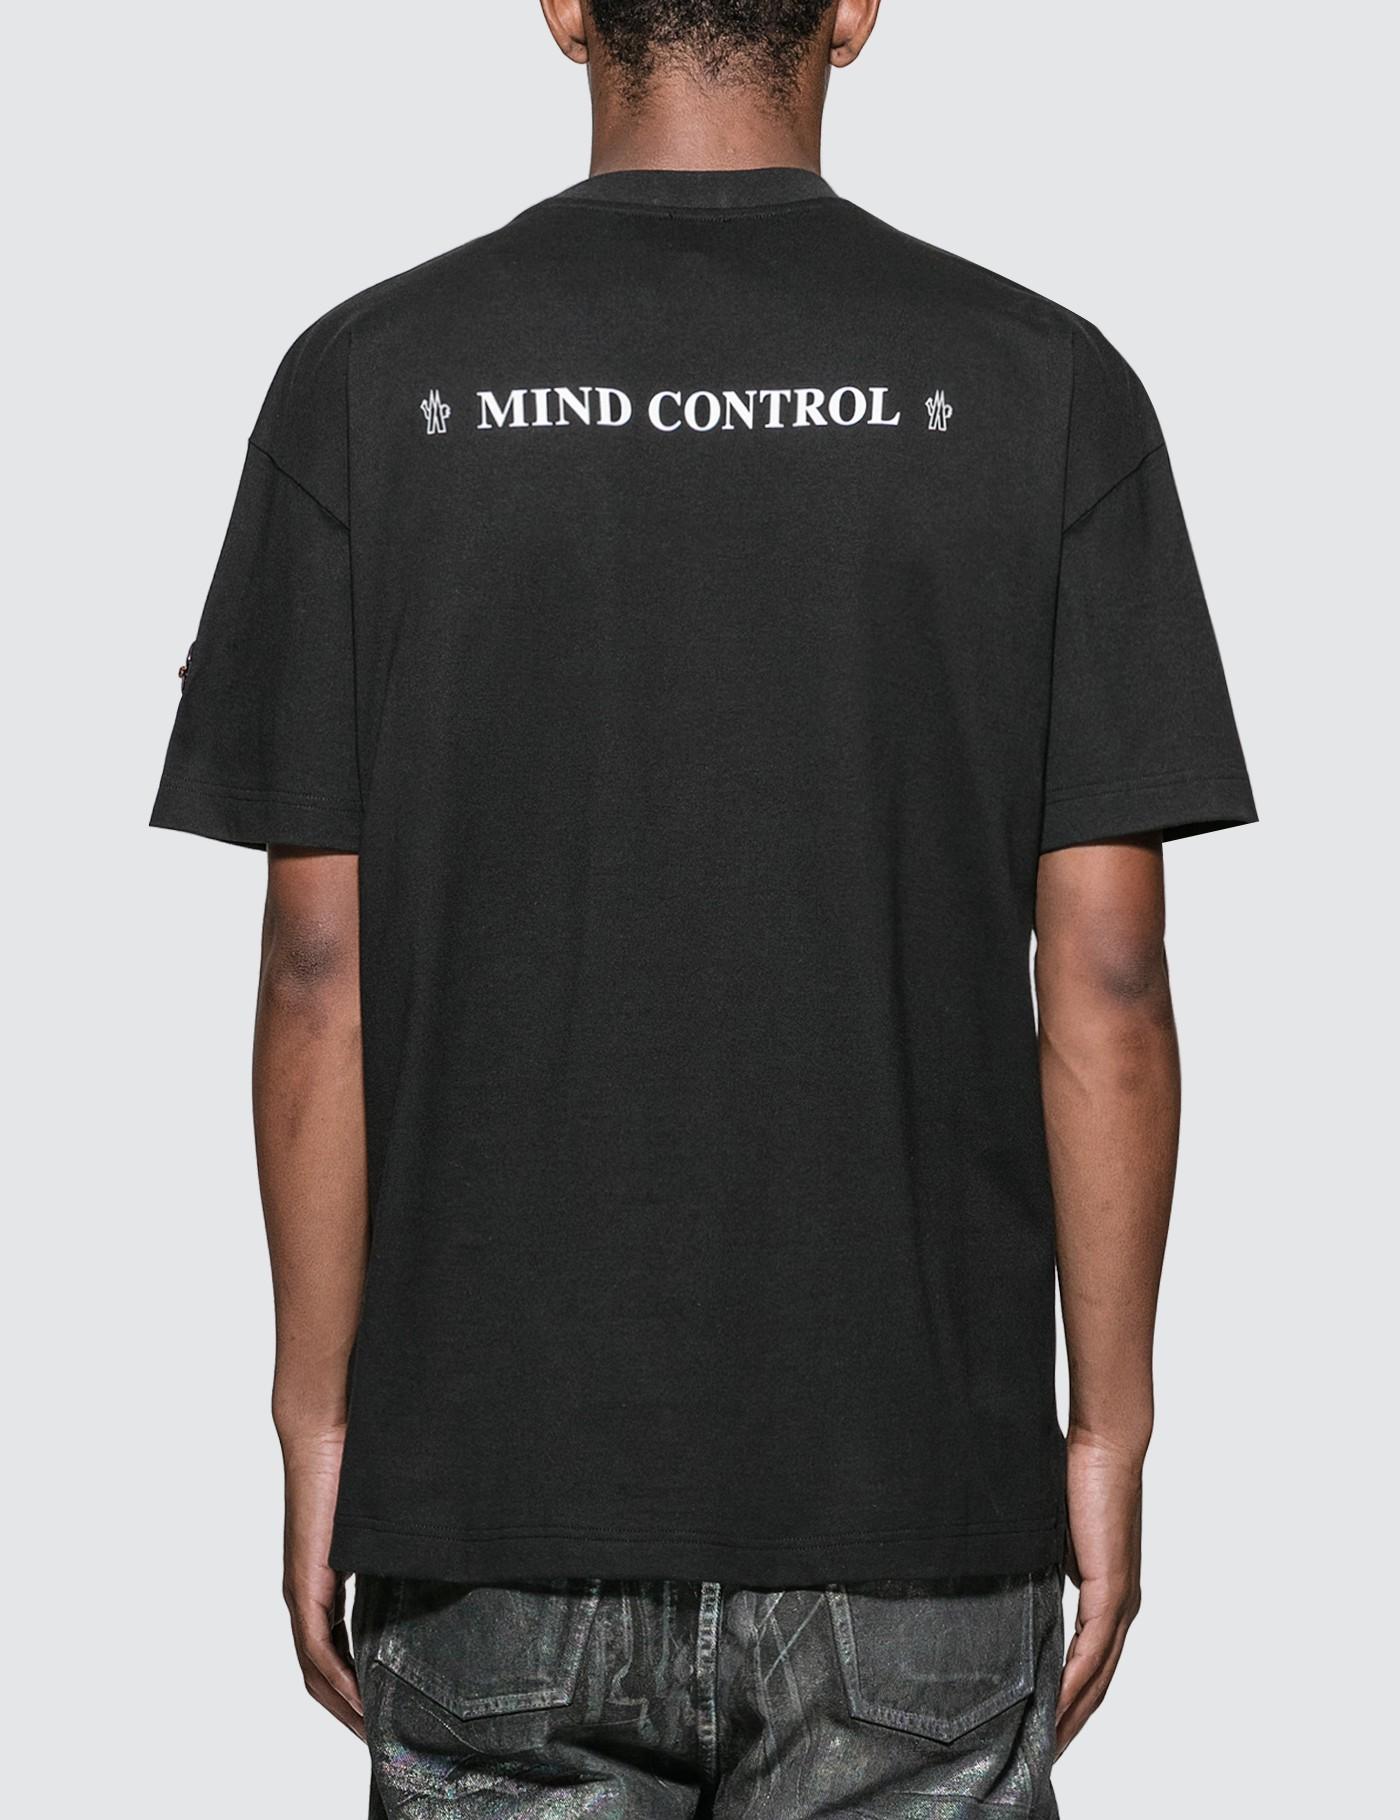 Moncler Genius X Palm Angels Round Neck T-shirt in Black for Men - Lyst